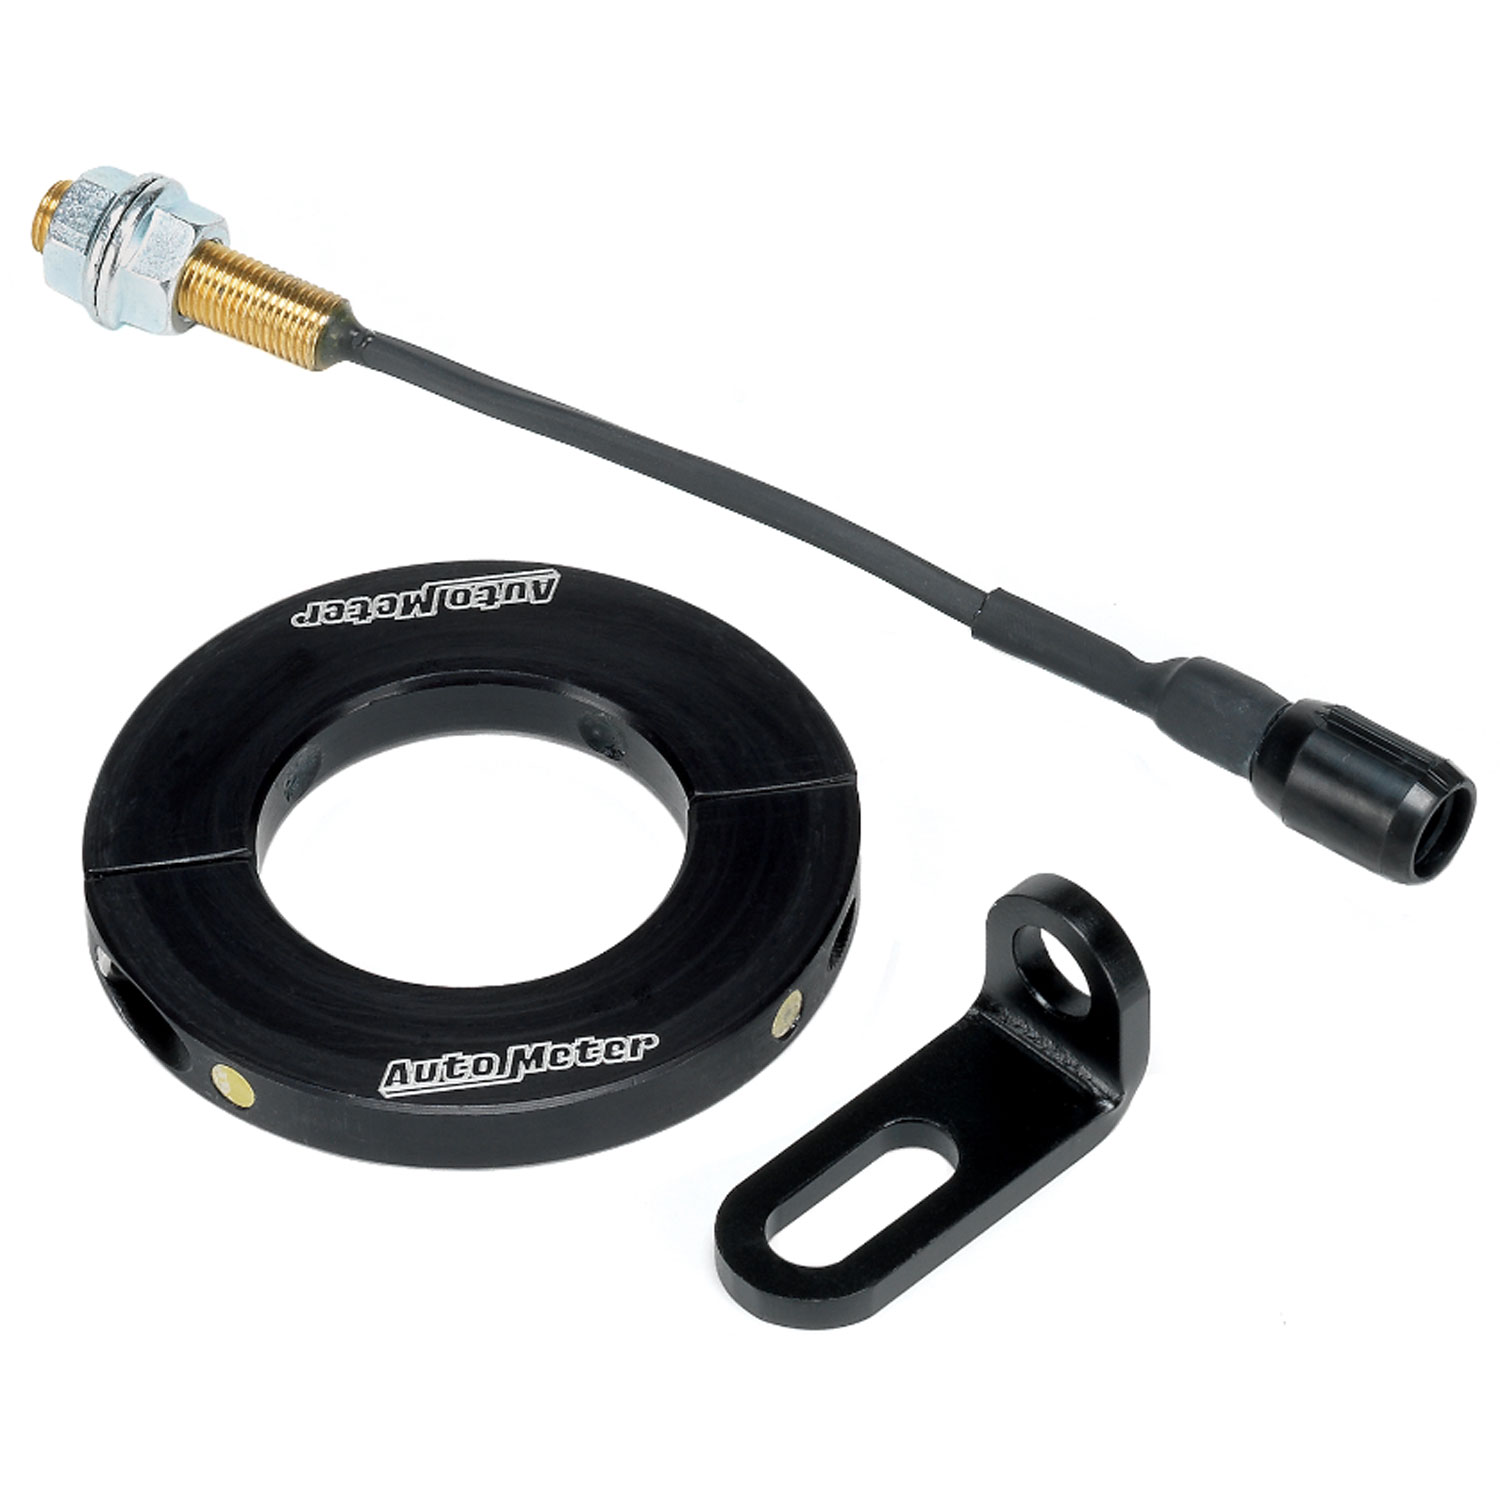 Driveshaft RPM Sensor Kit 47.6mm / 1.875